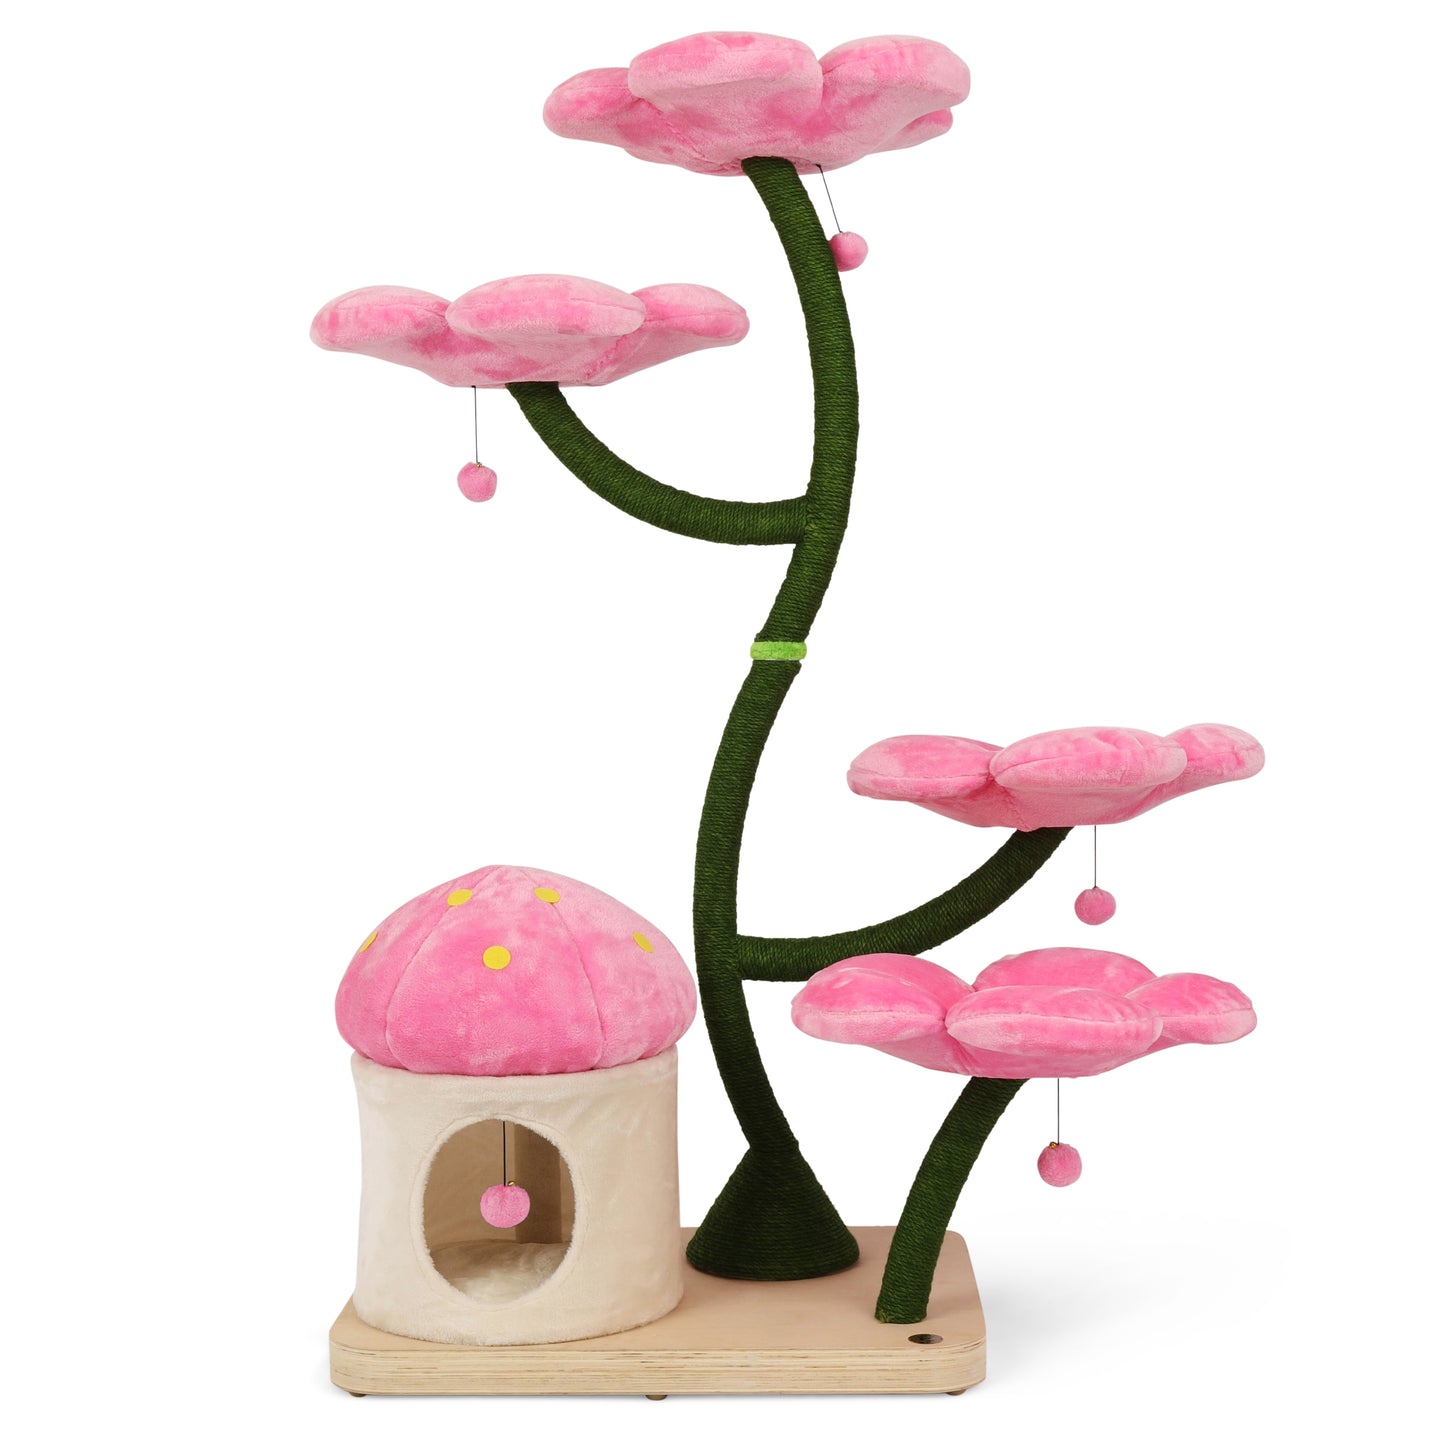 Azalea Eden's charming pink cat tree, feature a delightful pink flower on top